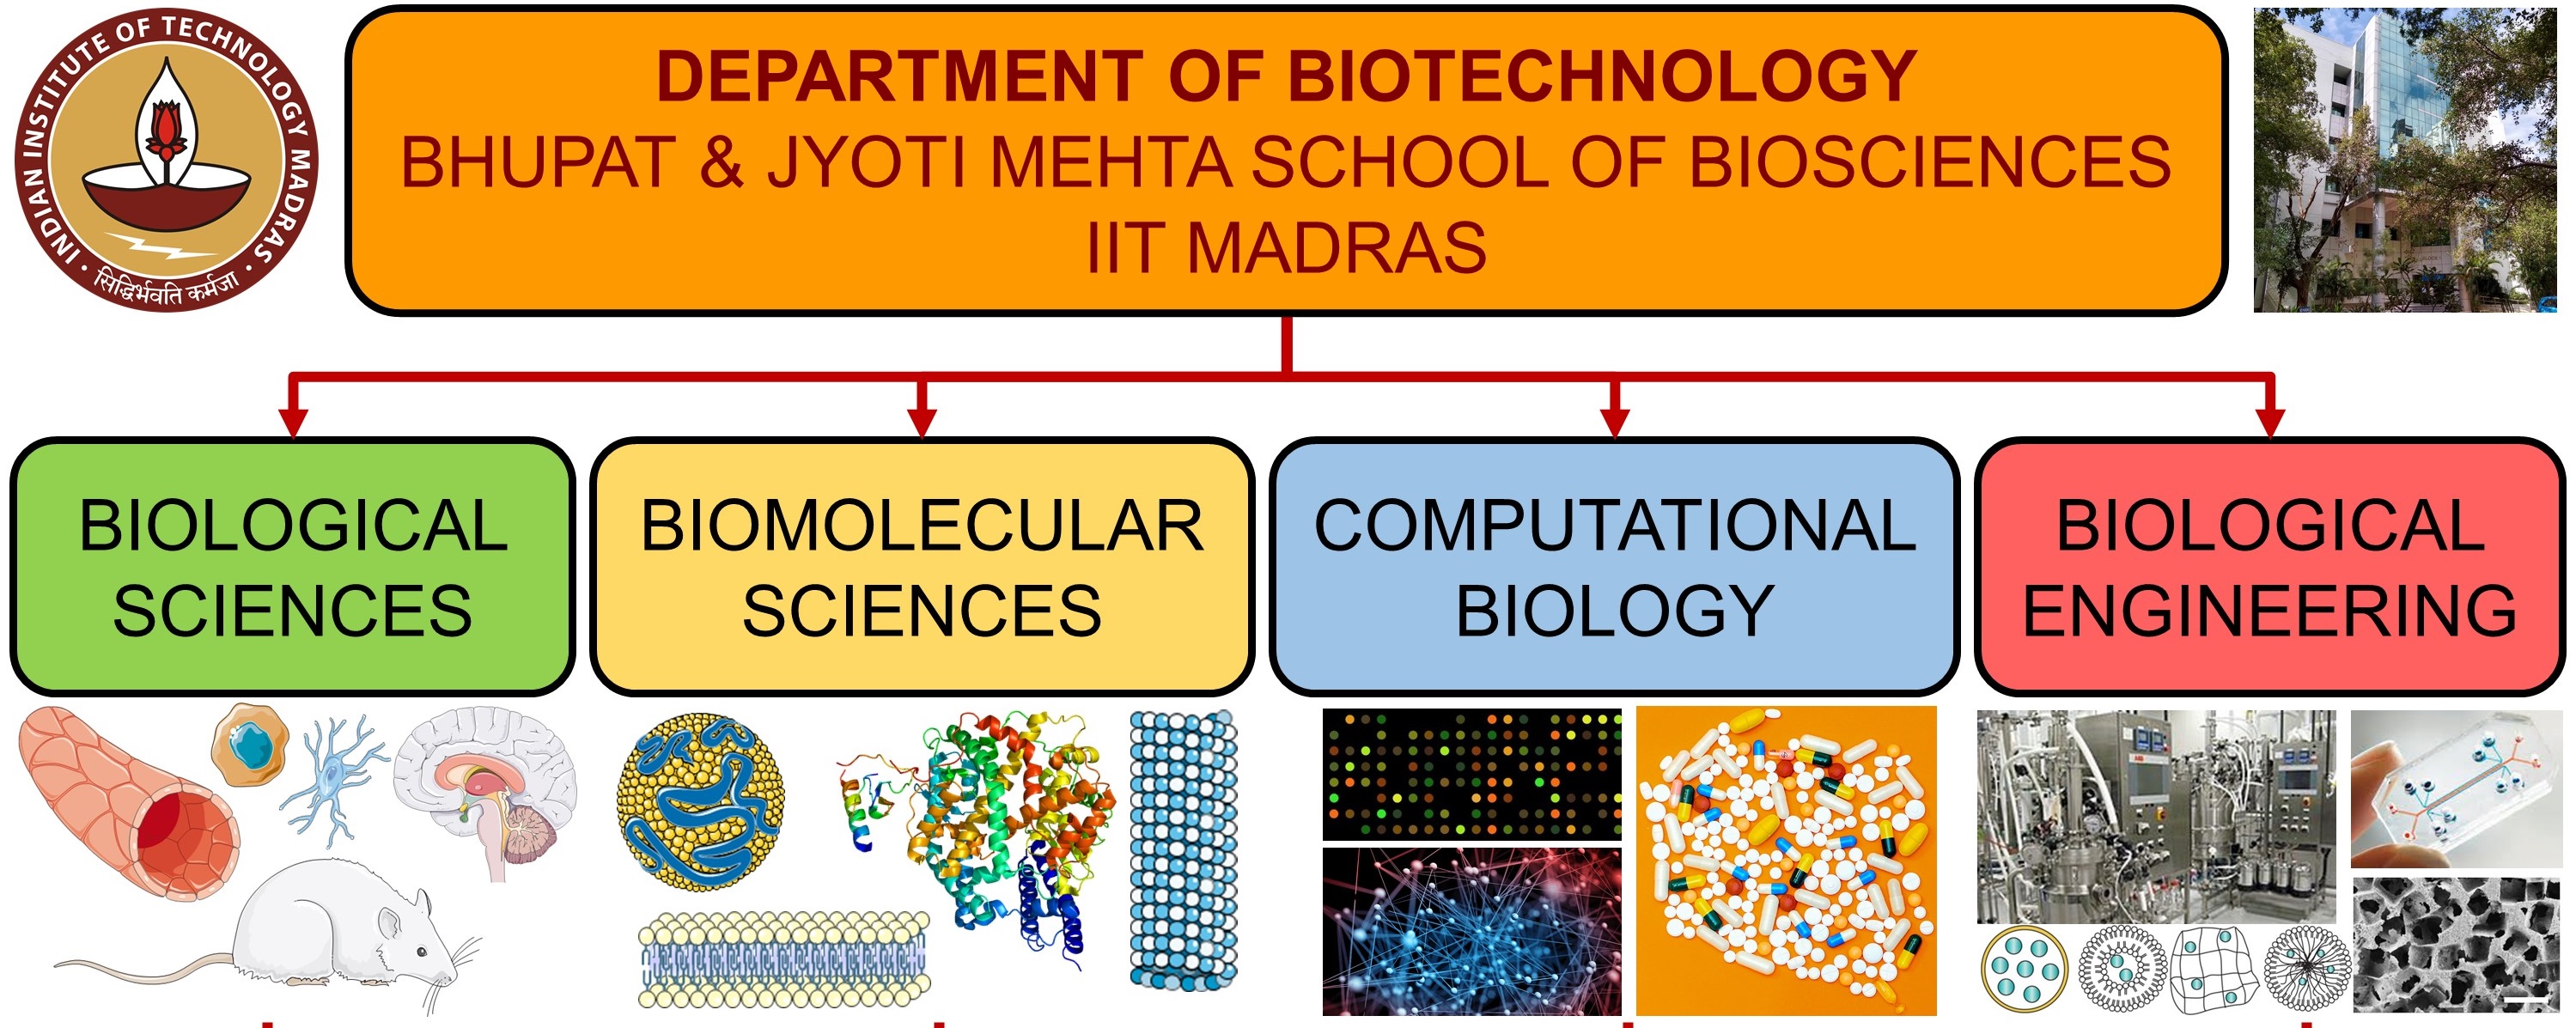 IITM-Department of Biotechnology